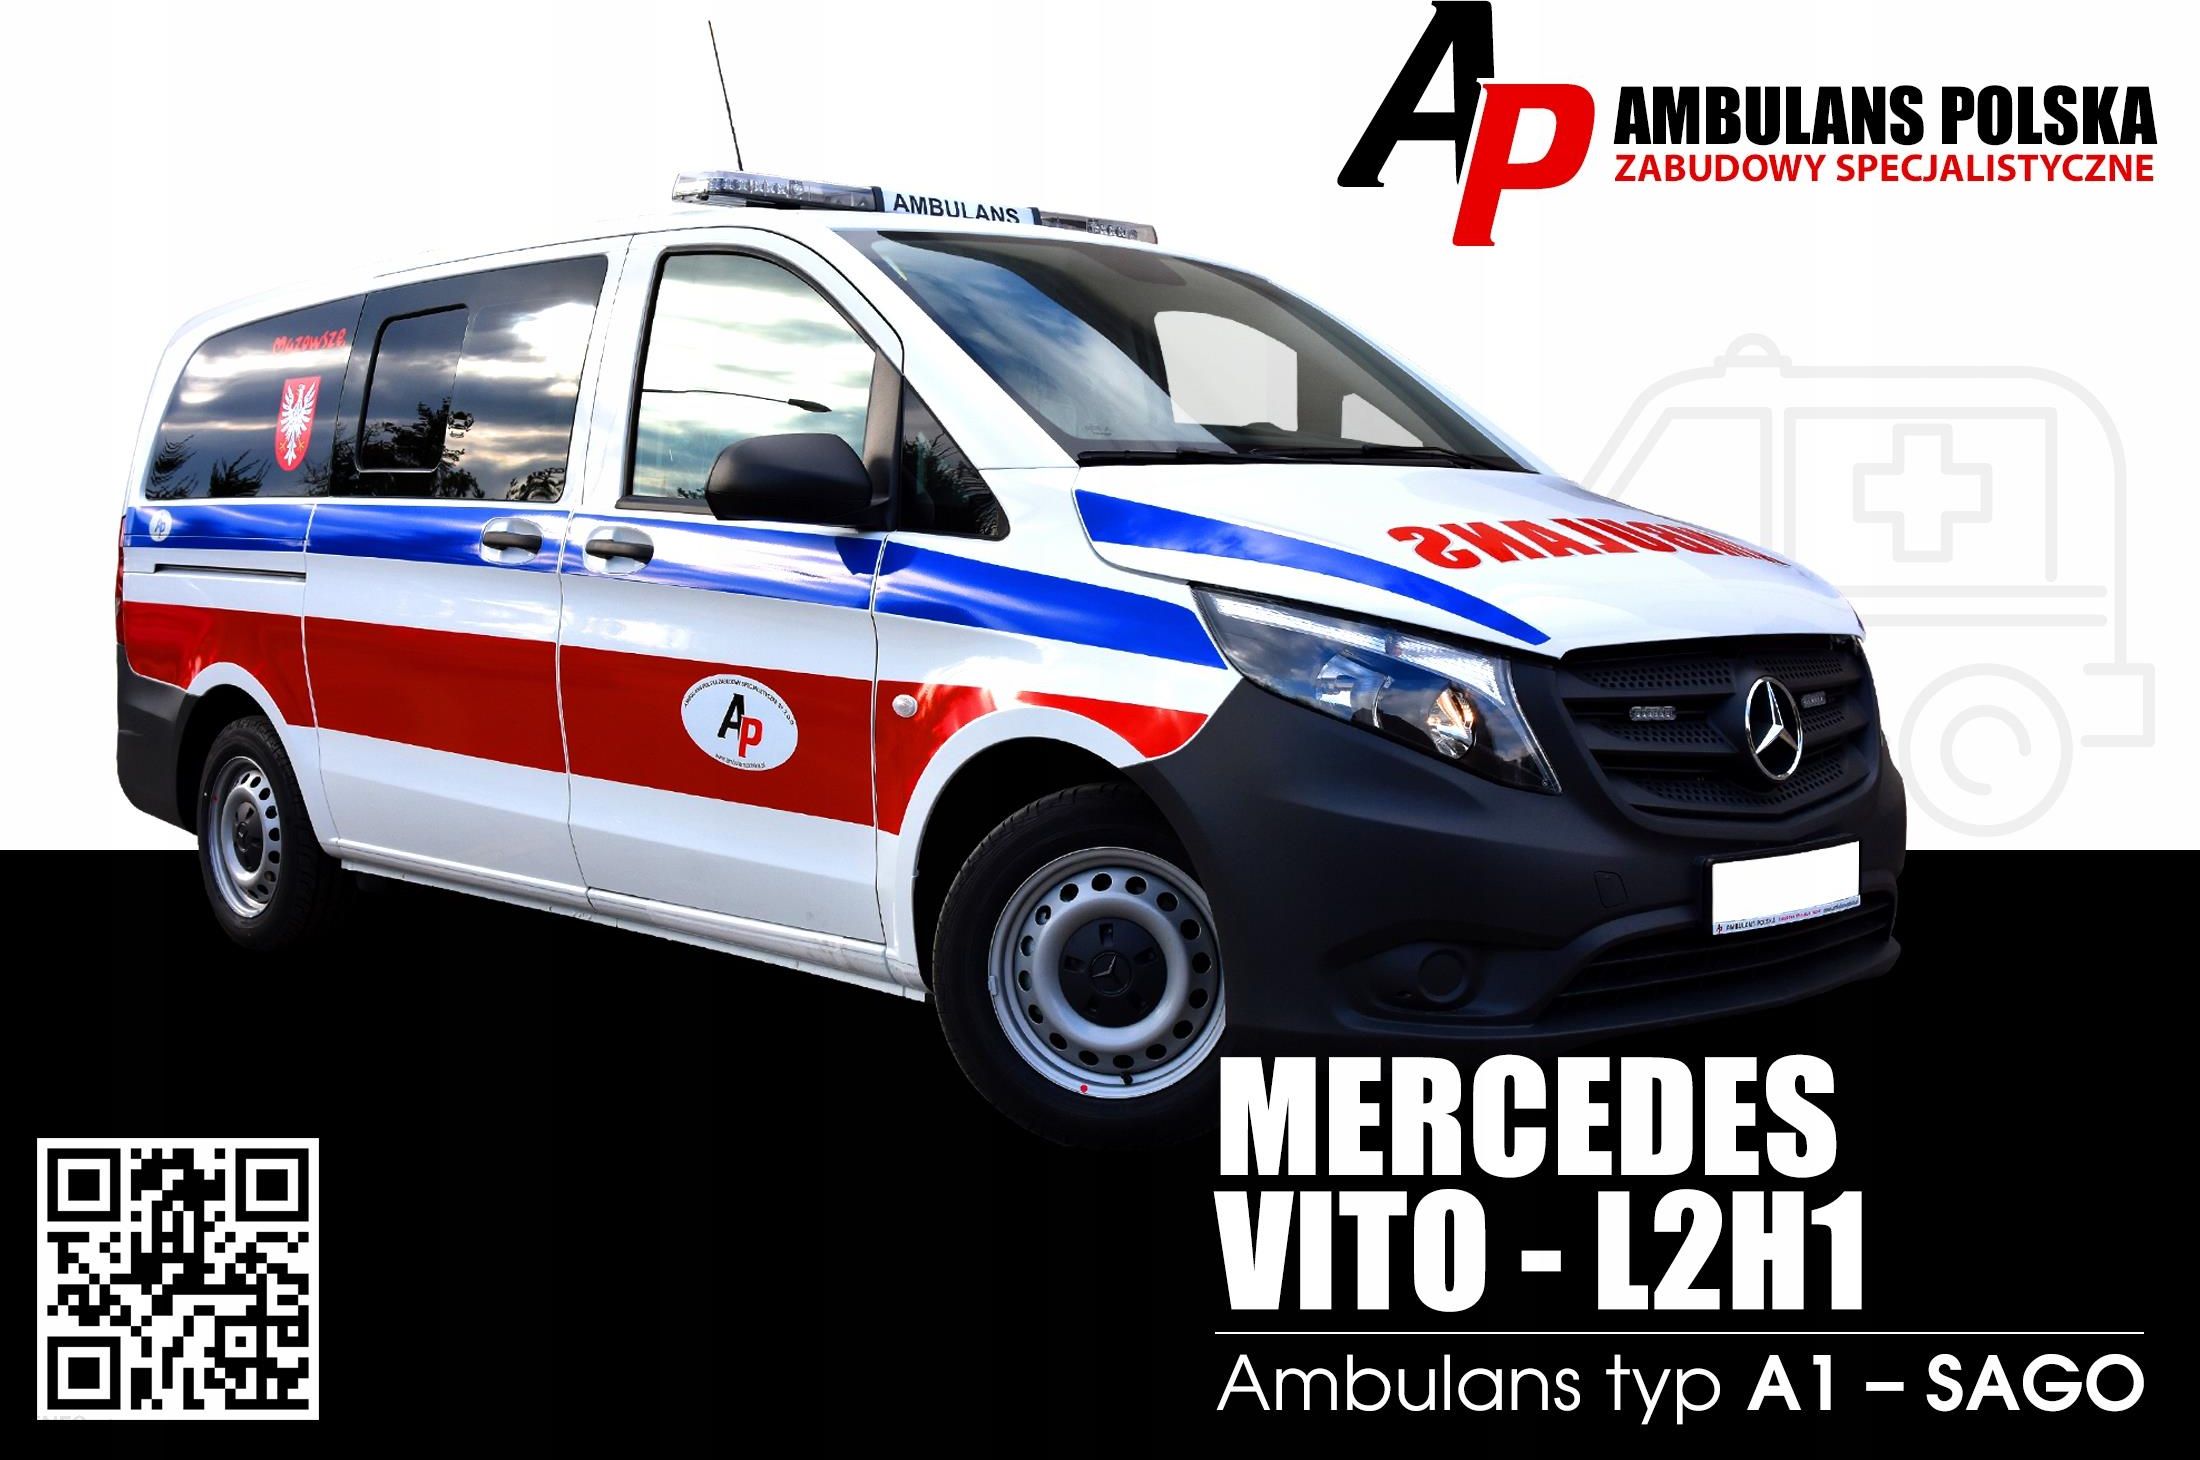 Karetka, Ambulans transportowy VITO typ A1 – SAGO